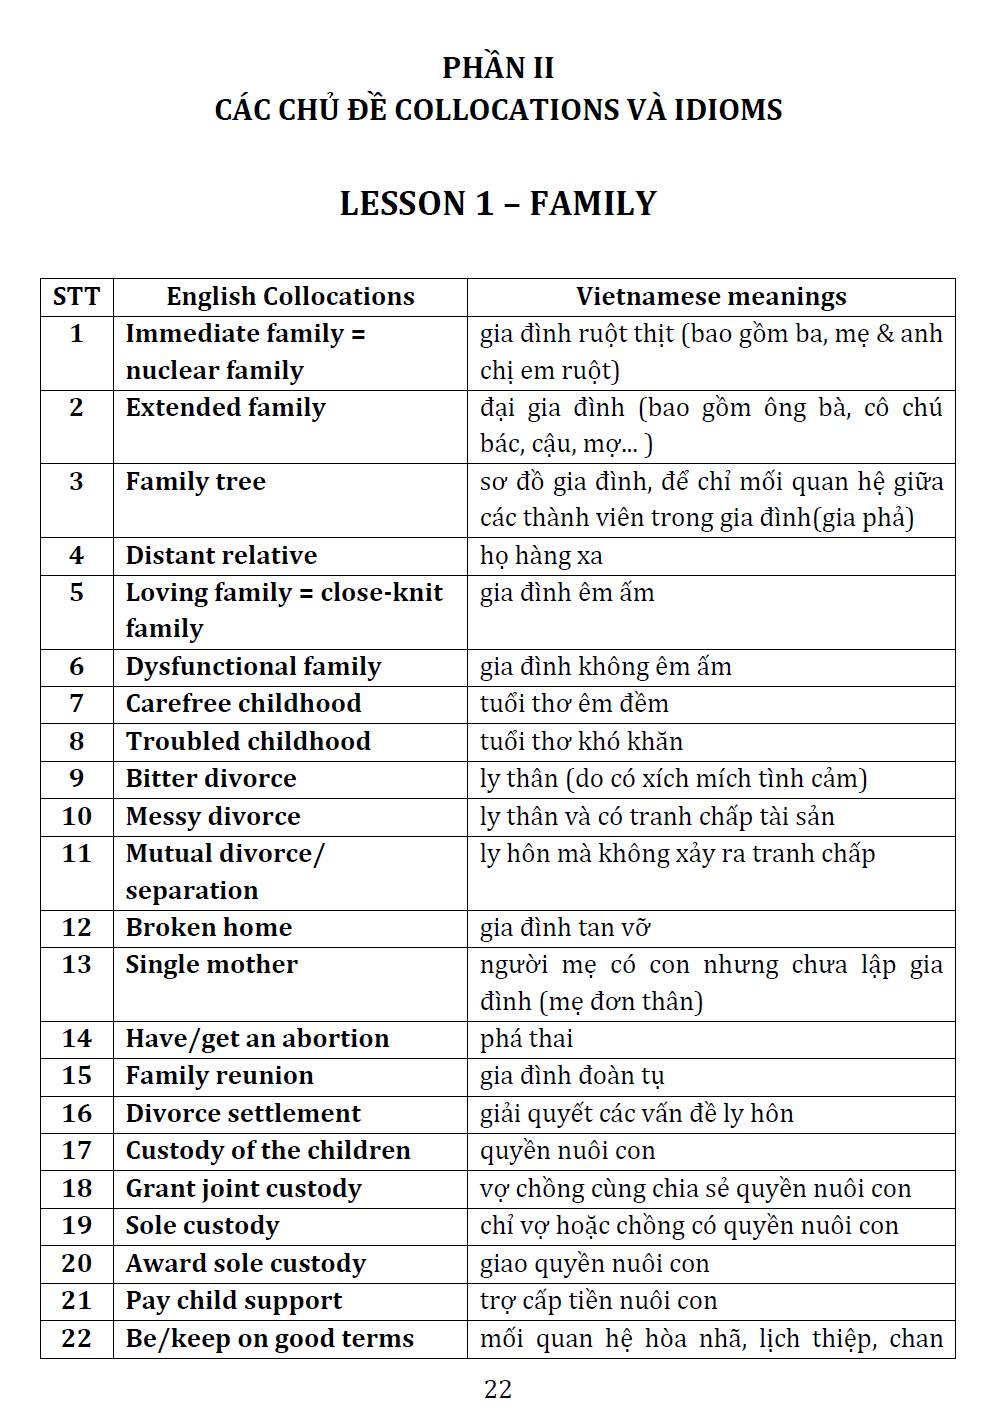 2000 English Collocation and Idioms